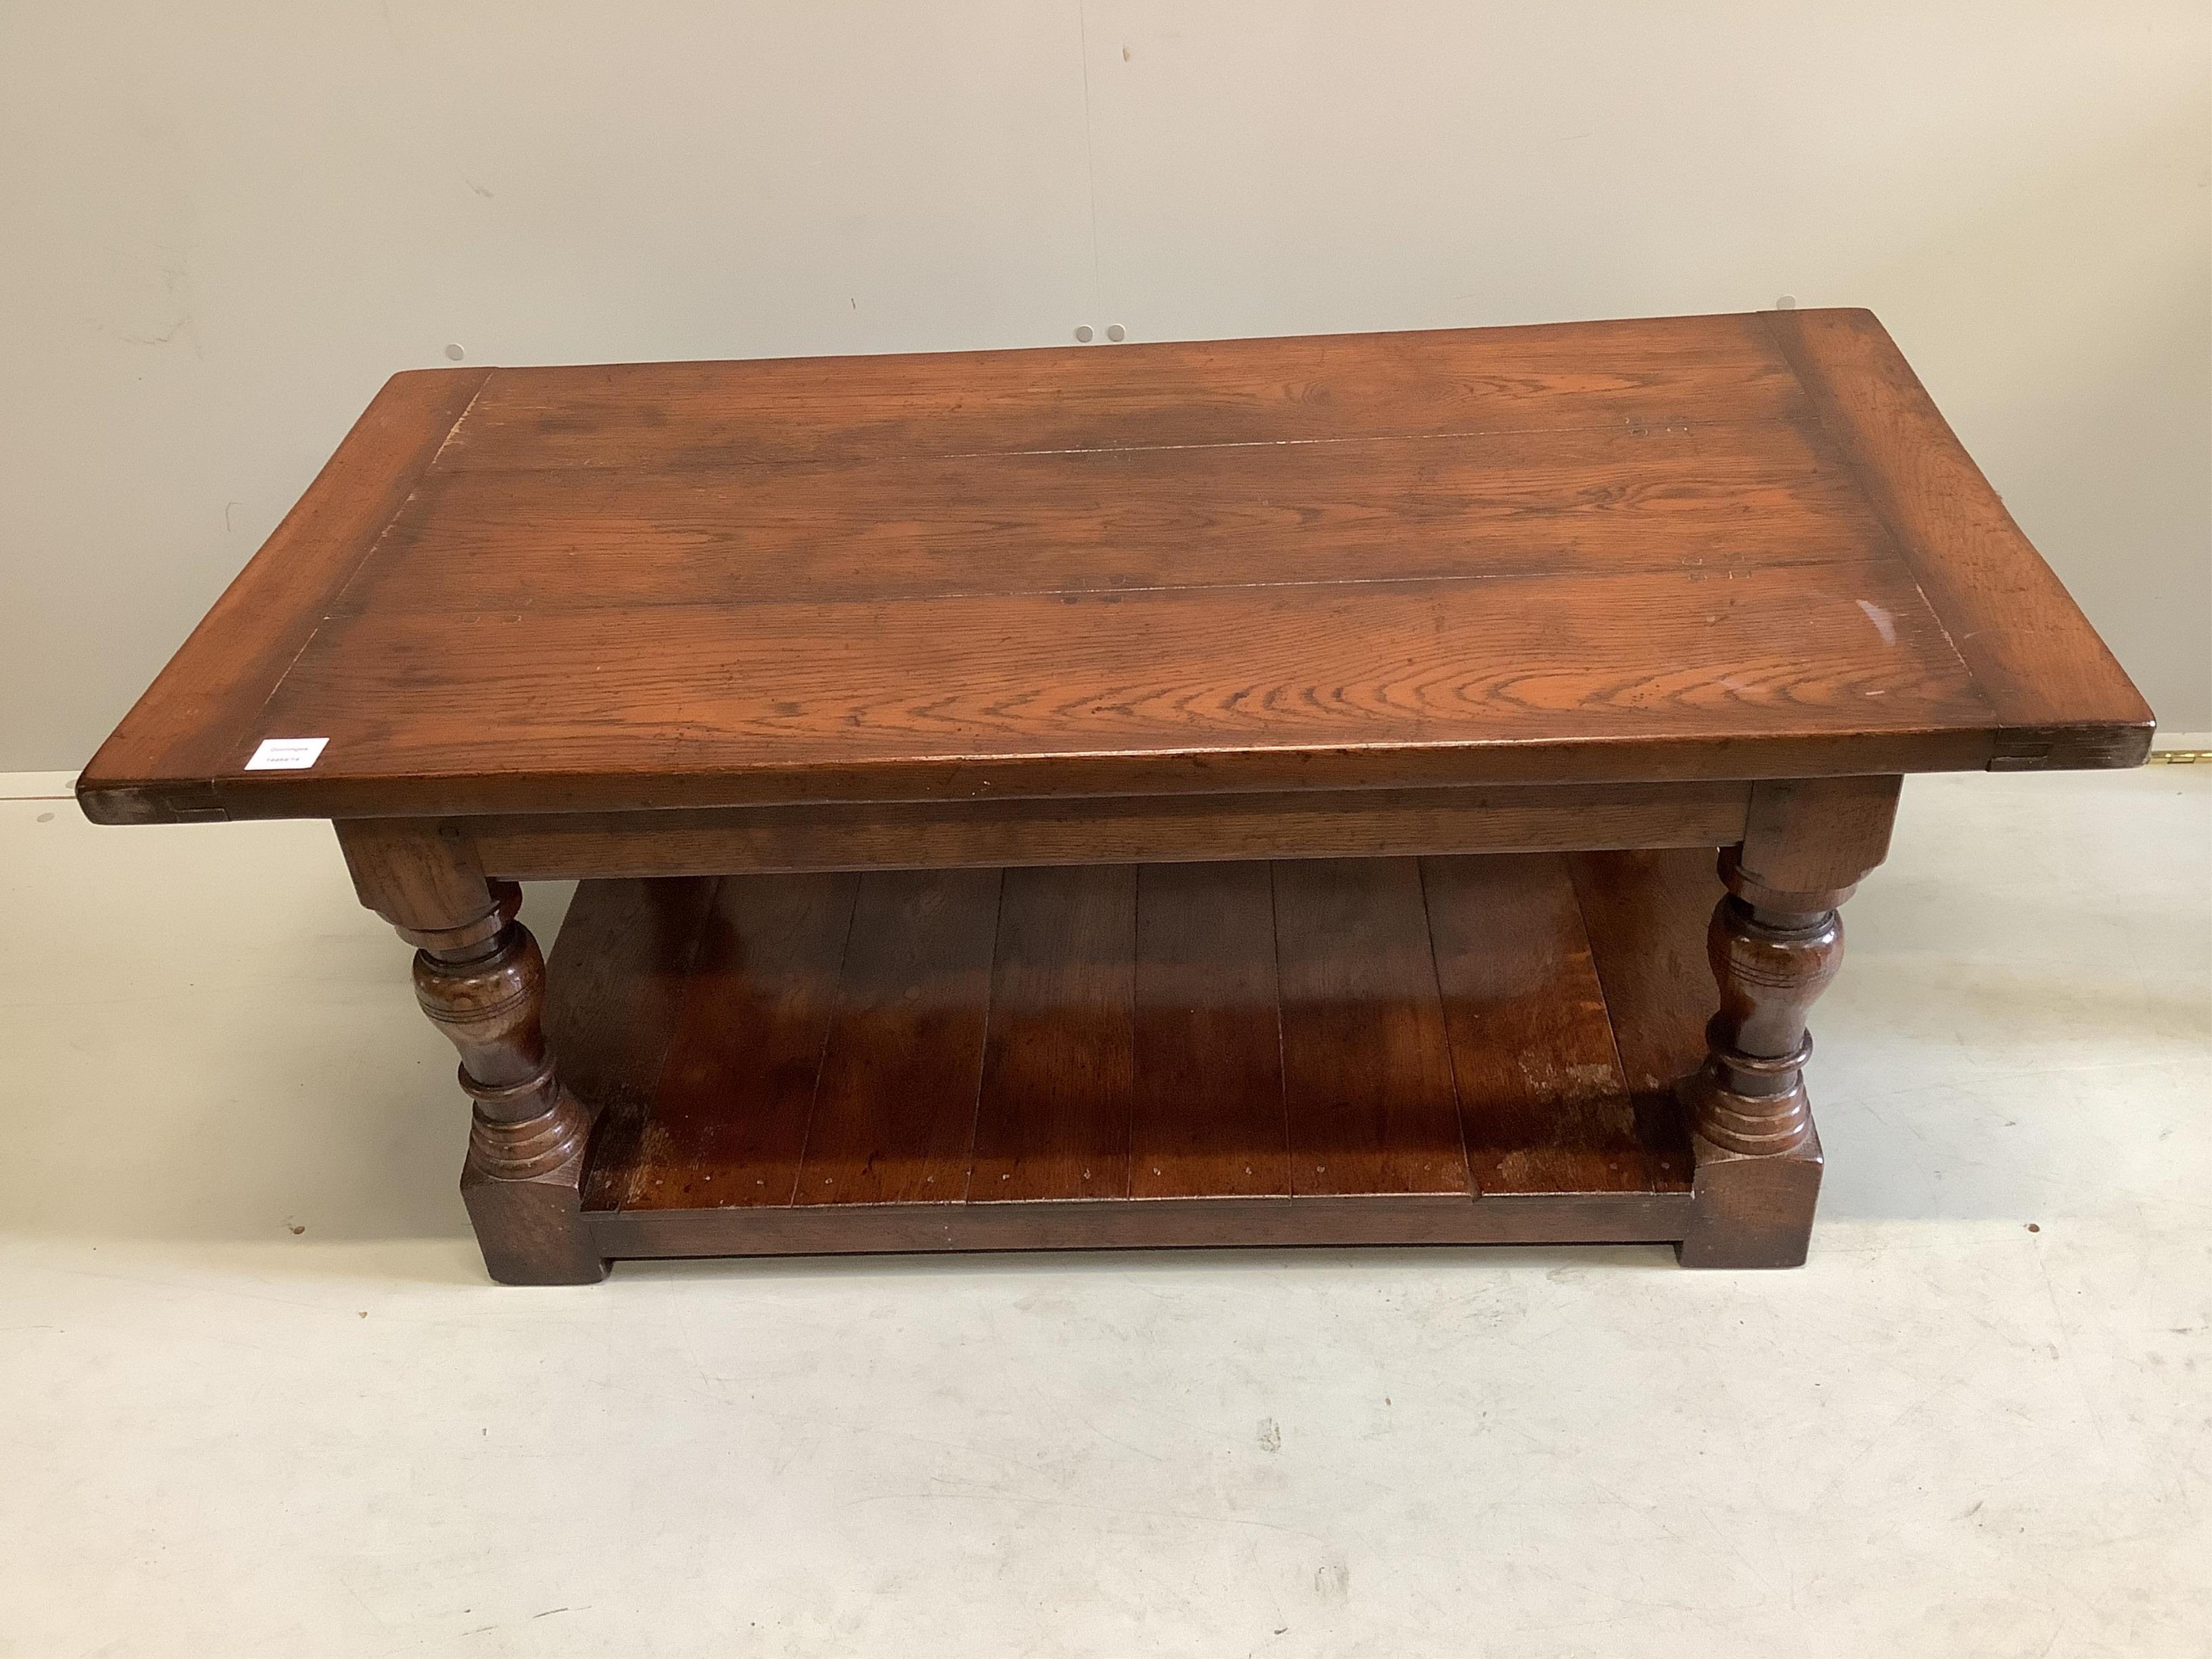 An 18th century style rectangular oak two tier coffee table, width 121cm, depth 61cm, height 49cm. Condition - fair